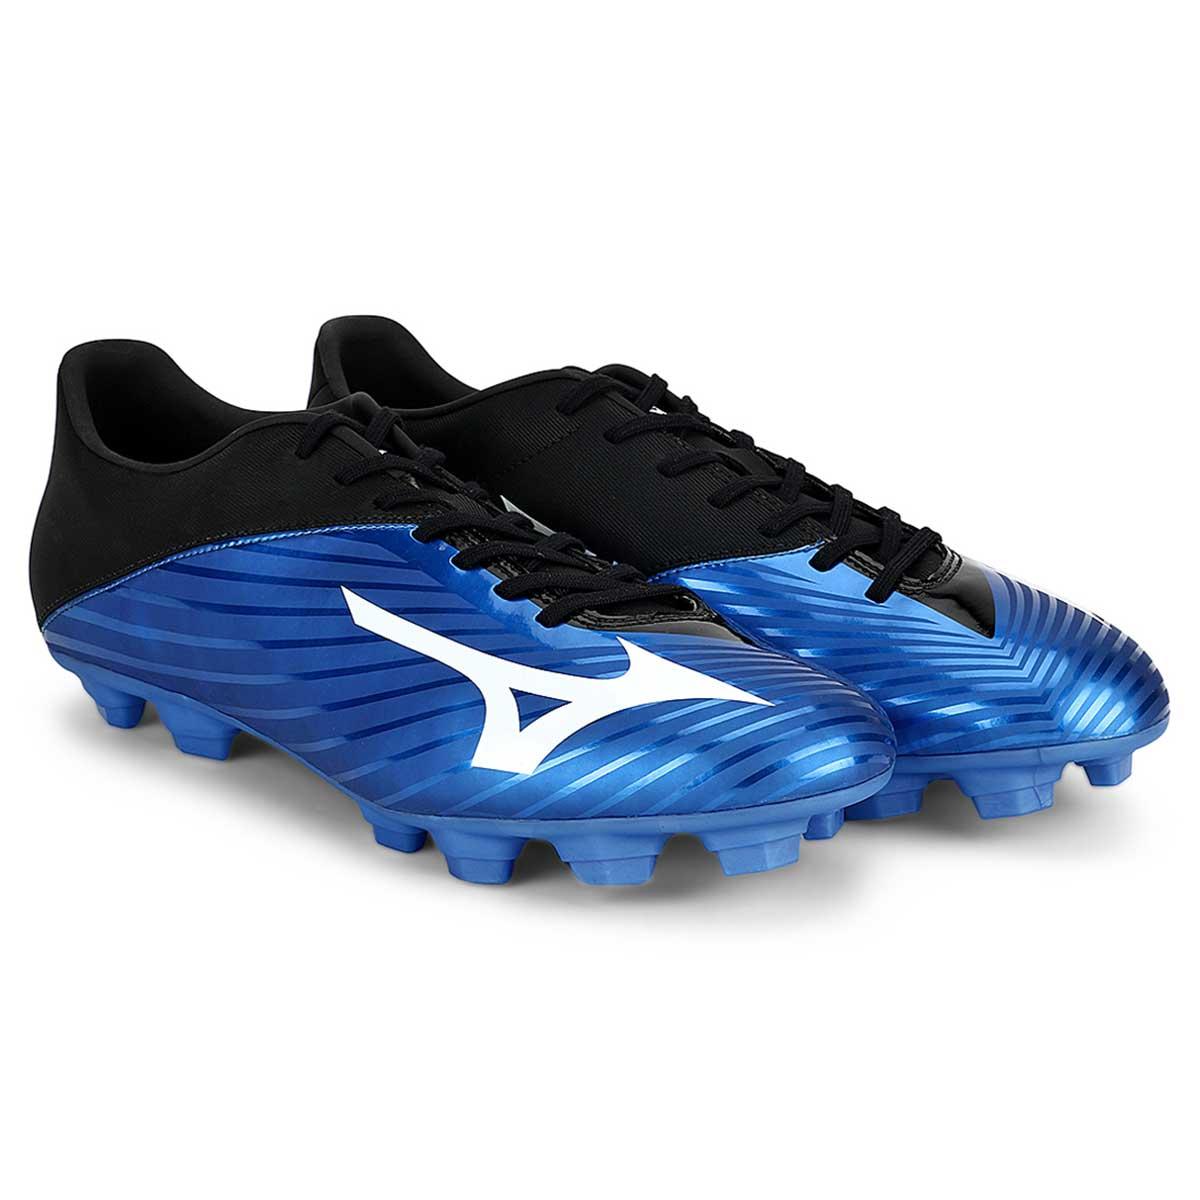 Buy Mizuno Basara 103 MD Football Shoes (Blue/Black) Online